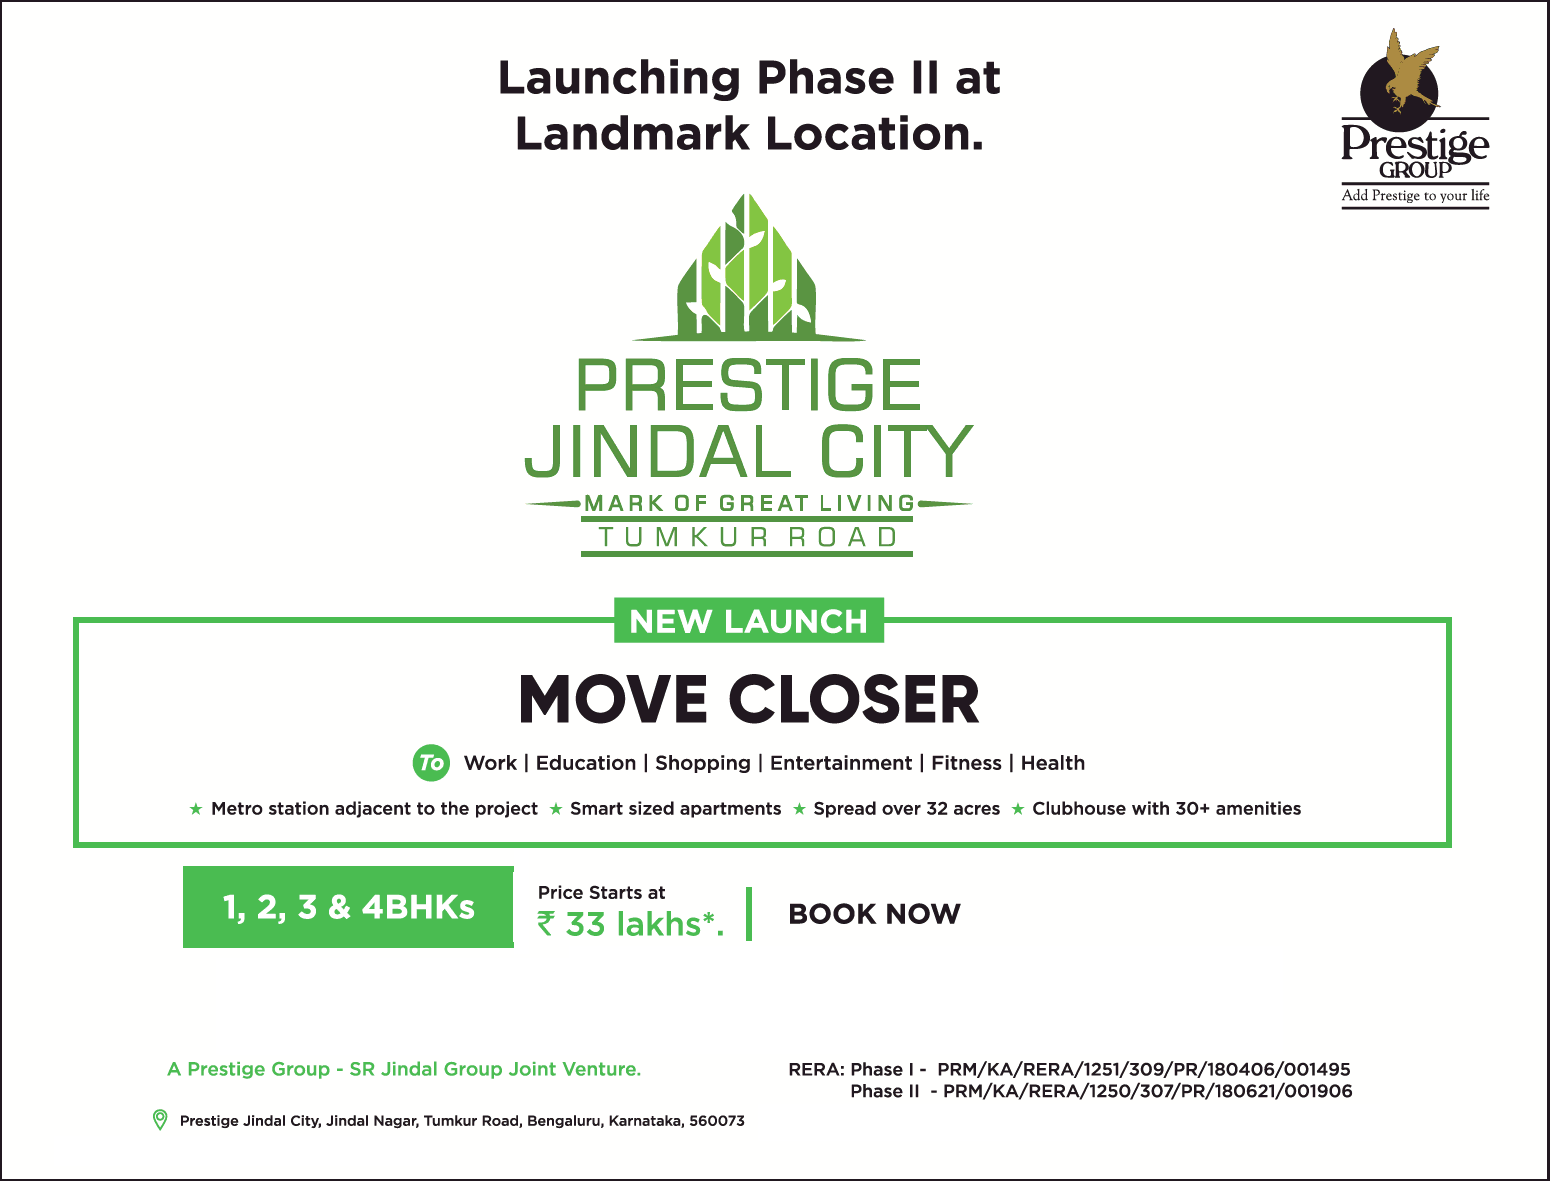 Launching Phase 2 at landmark location at Prestige Jindal City in Bangalore Update